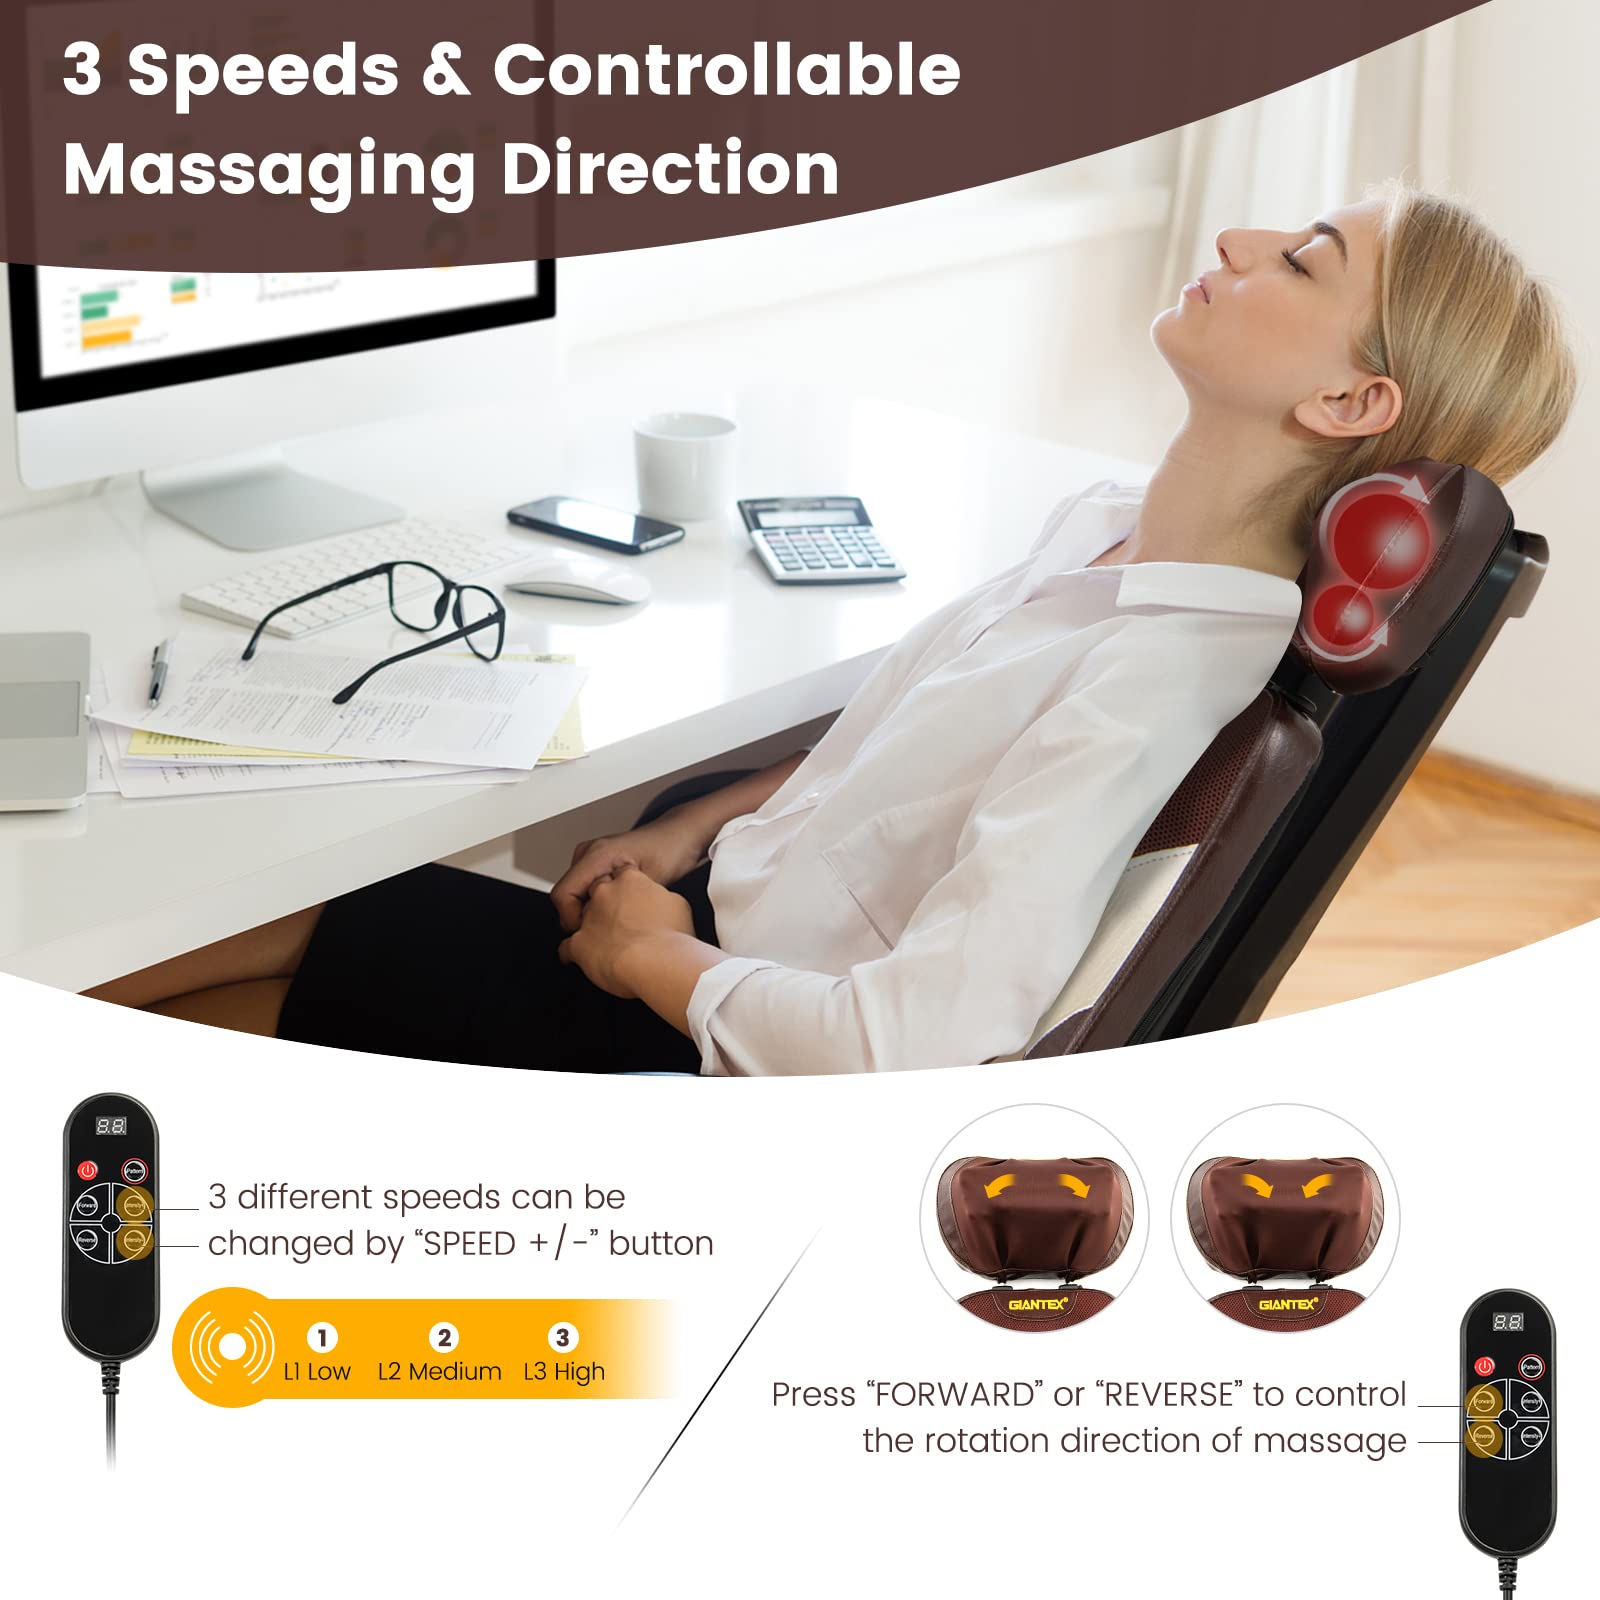 Giantex Back Massager Chair Pad - Chair Massager with Adjustable Neck Pillow, 3 Speeds & 3-Level Timer, Brown